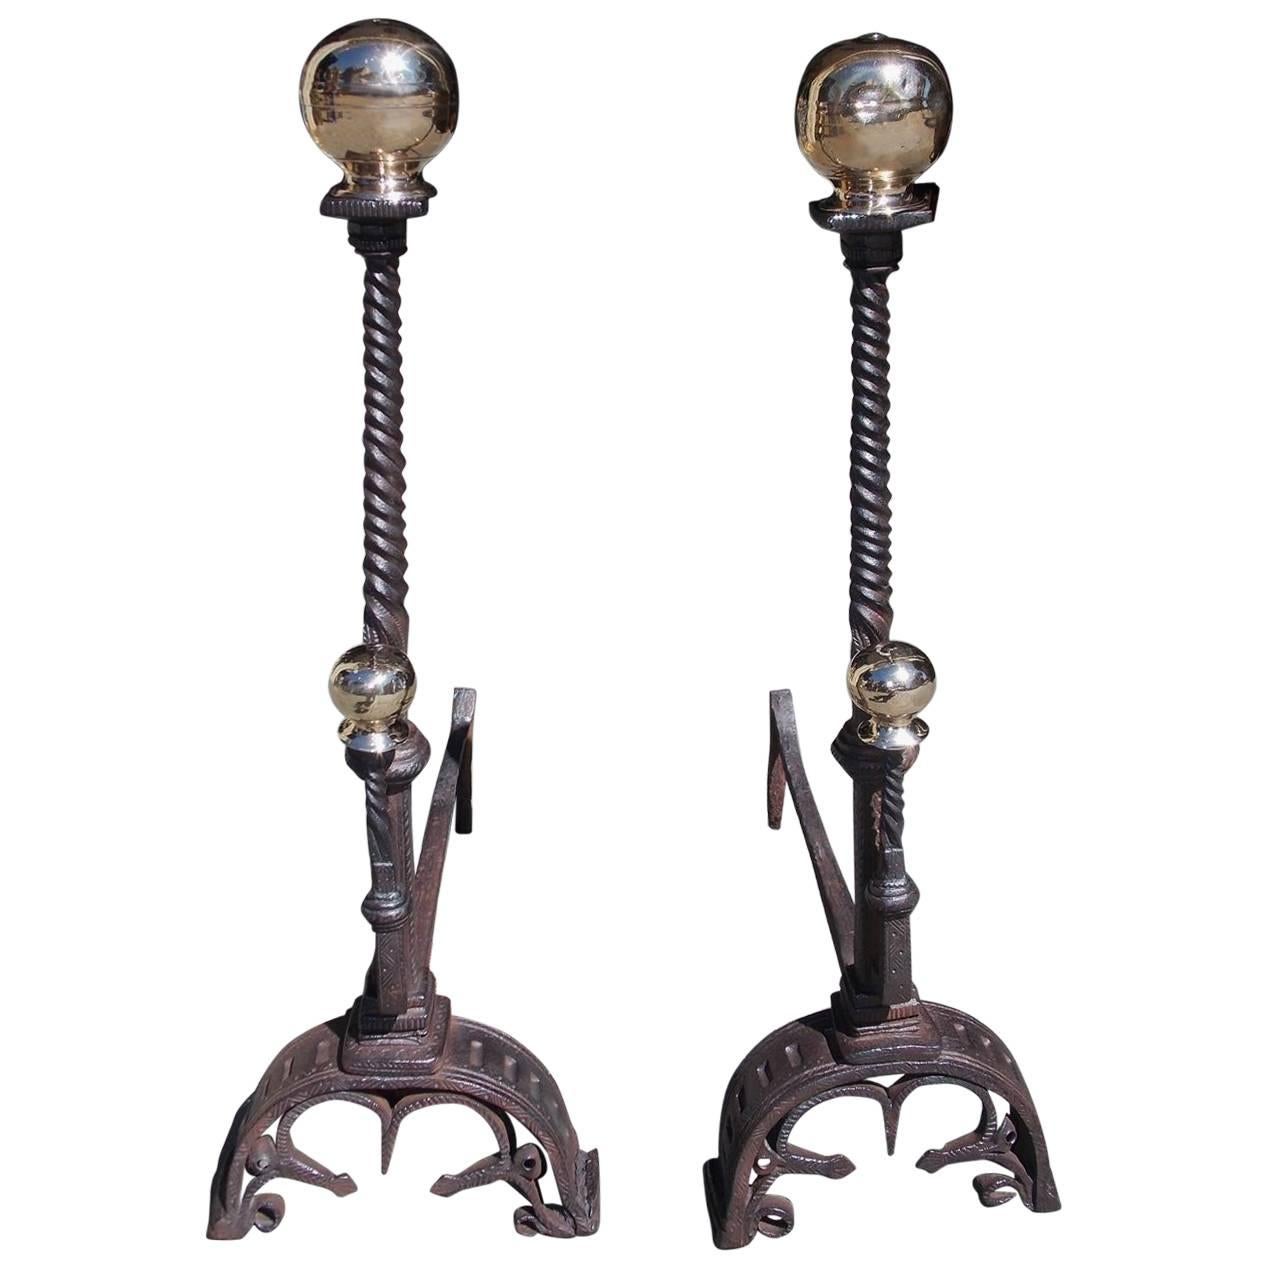 Pair of English Wrought Iron and Brass Ball Top Andirons, Circa 1780